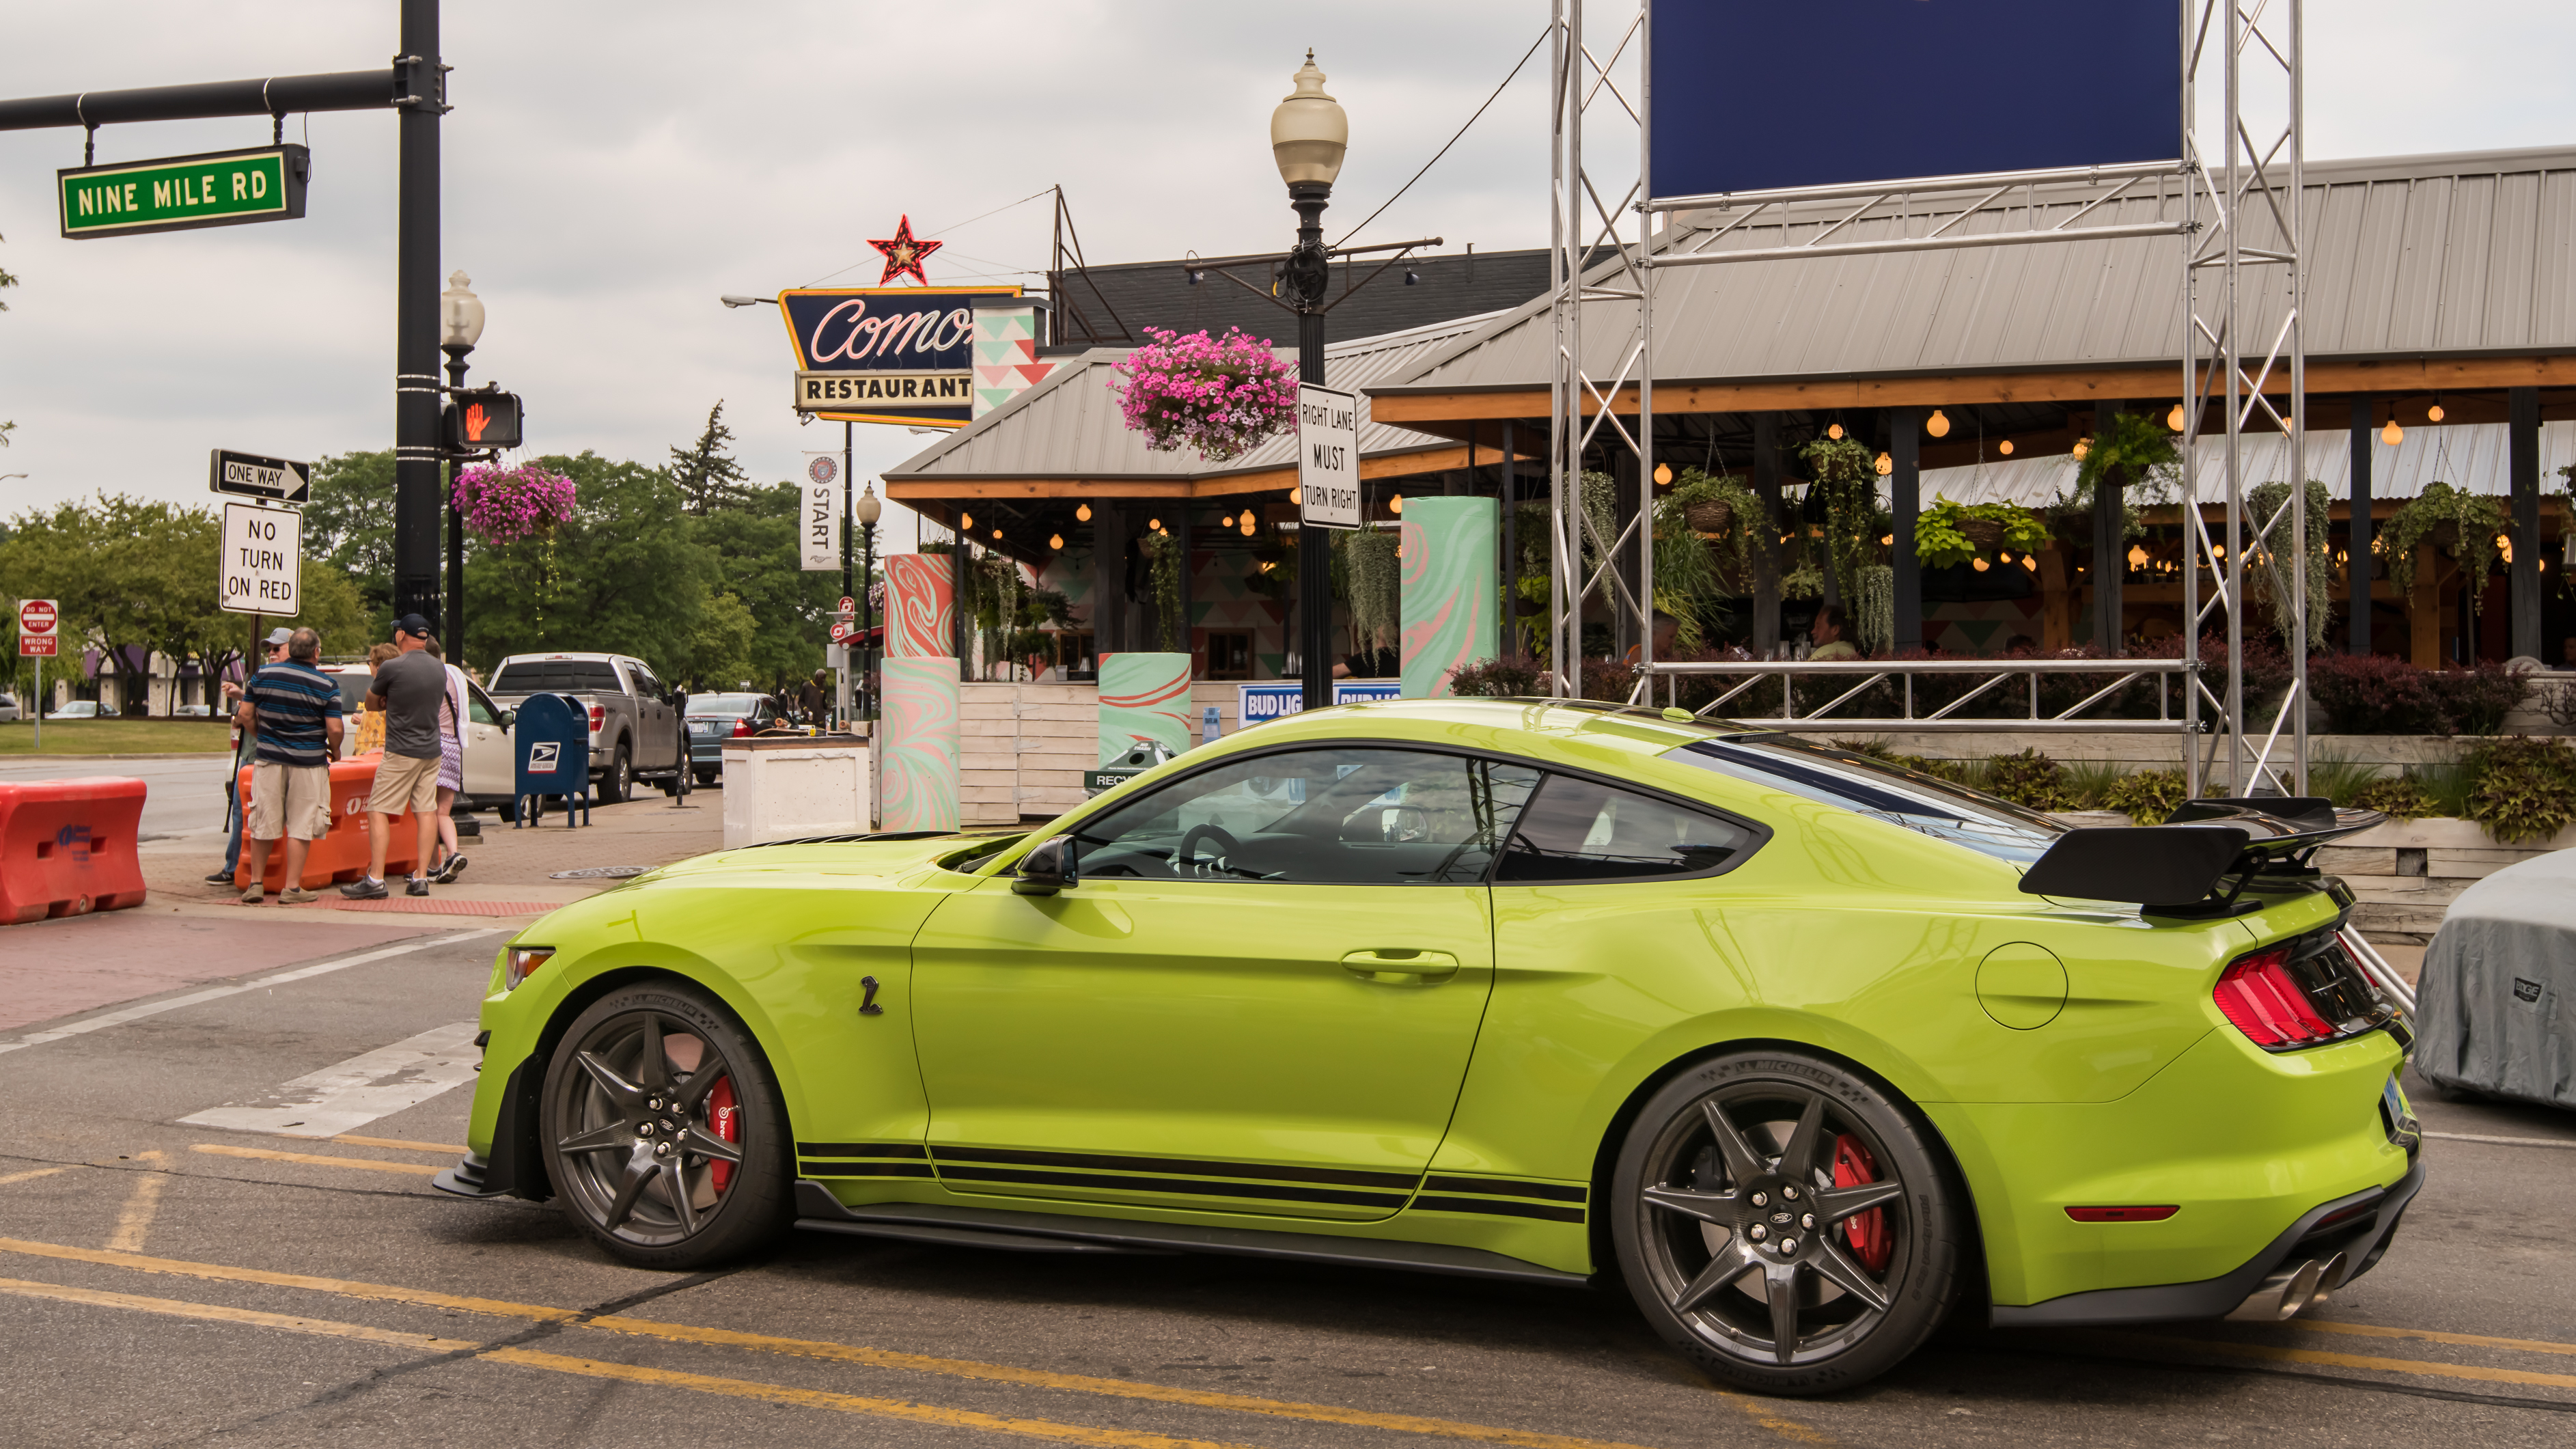 A 2020 Ford Mustang Shelby GT500 car in Ferndale, Michigan. Photo: Steve Lagreca/Shutterstock